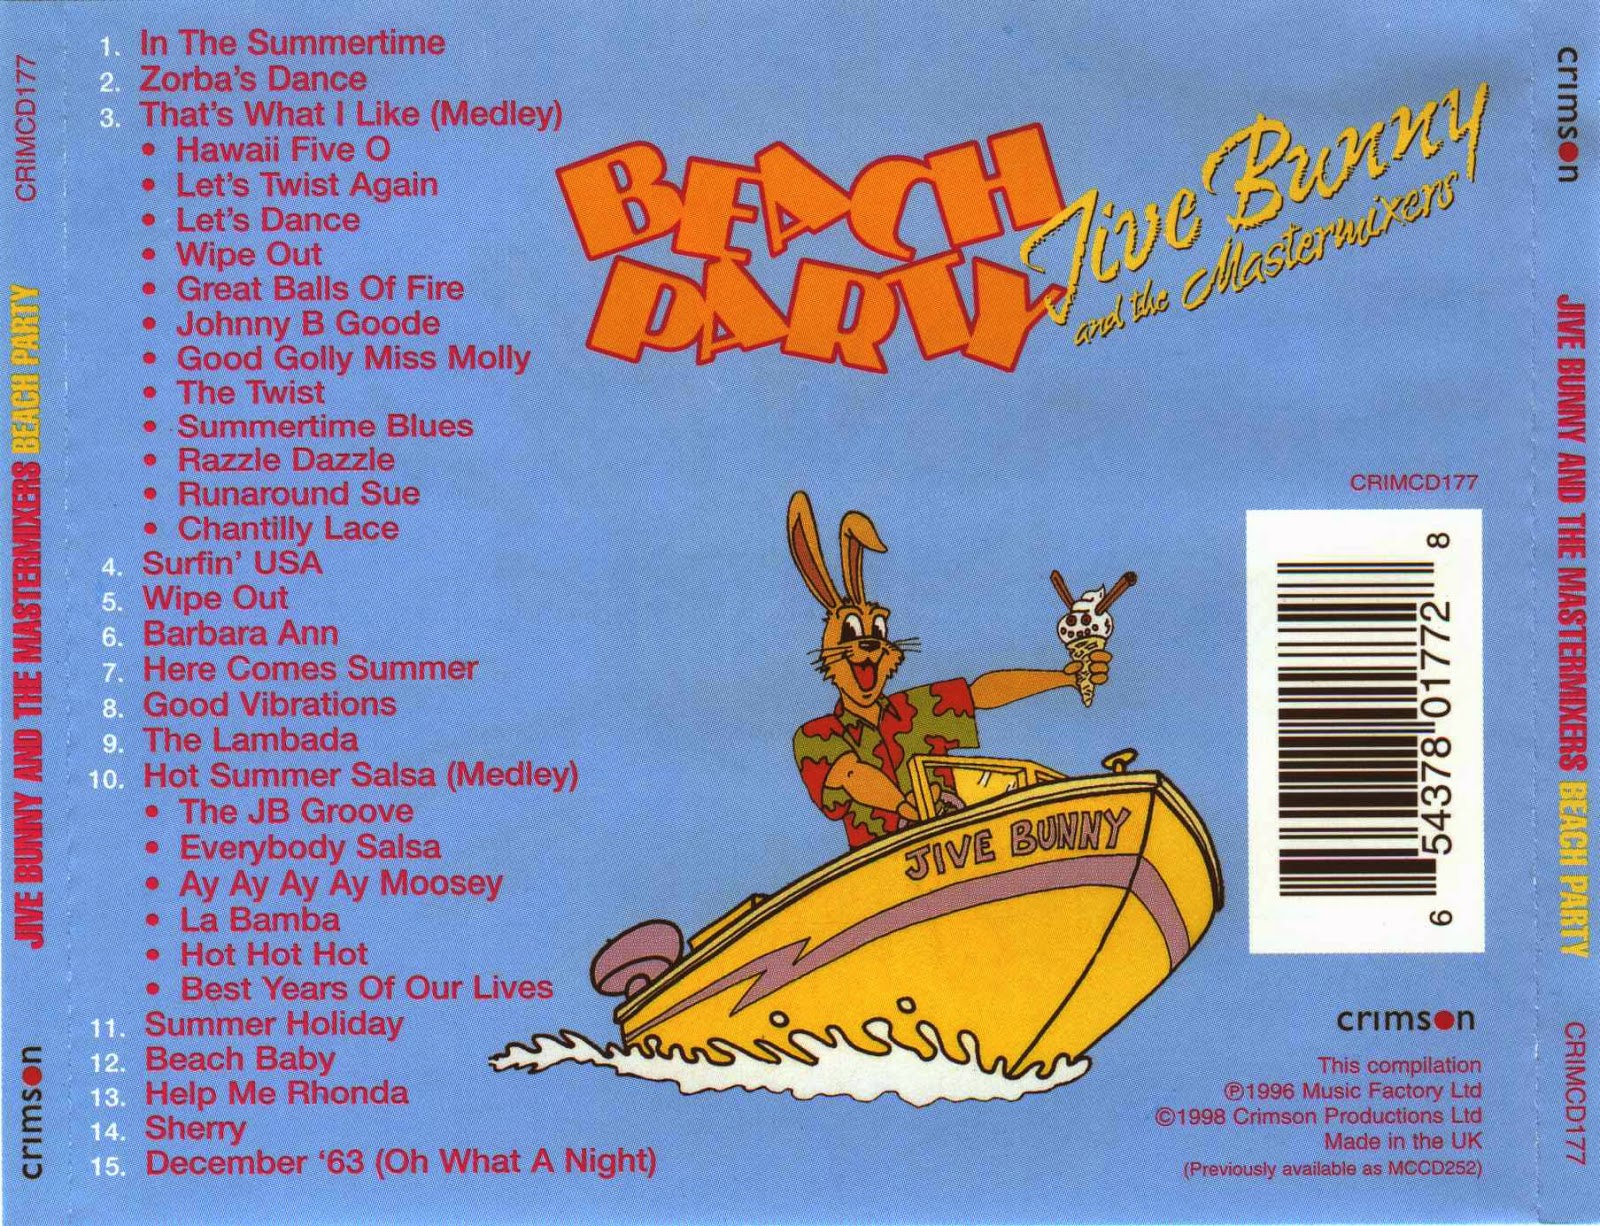 Jive Bunny 1989. Jive Bunny and the Mastermixers rocknroll great Hits 2021. Mix 70s Rock and Roll 2 Jive Bunny. The Trashmen - Surfin' Bird обложка. Zorba s dance remix